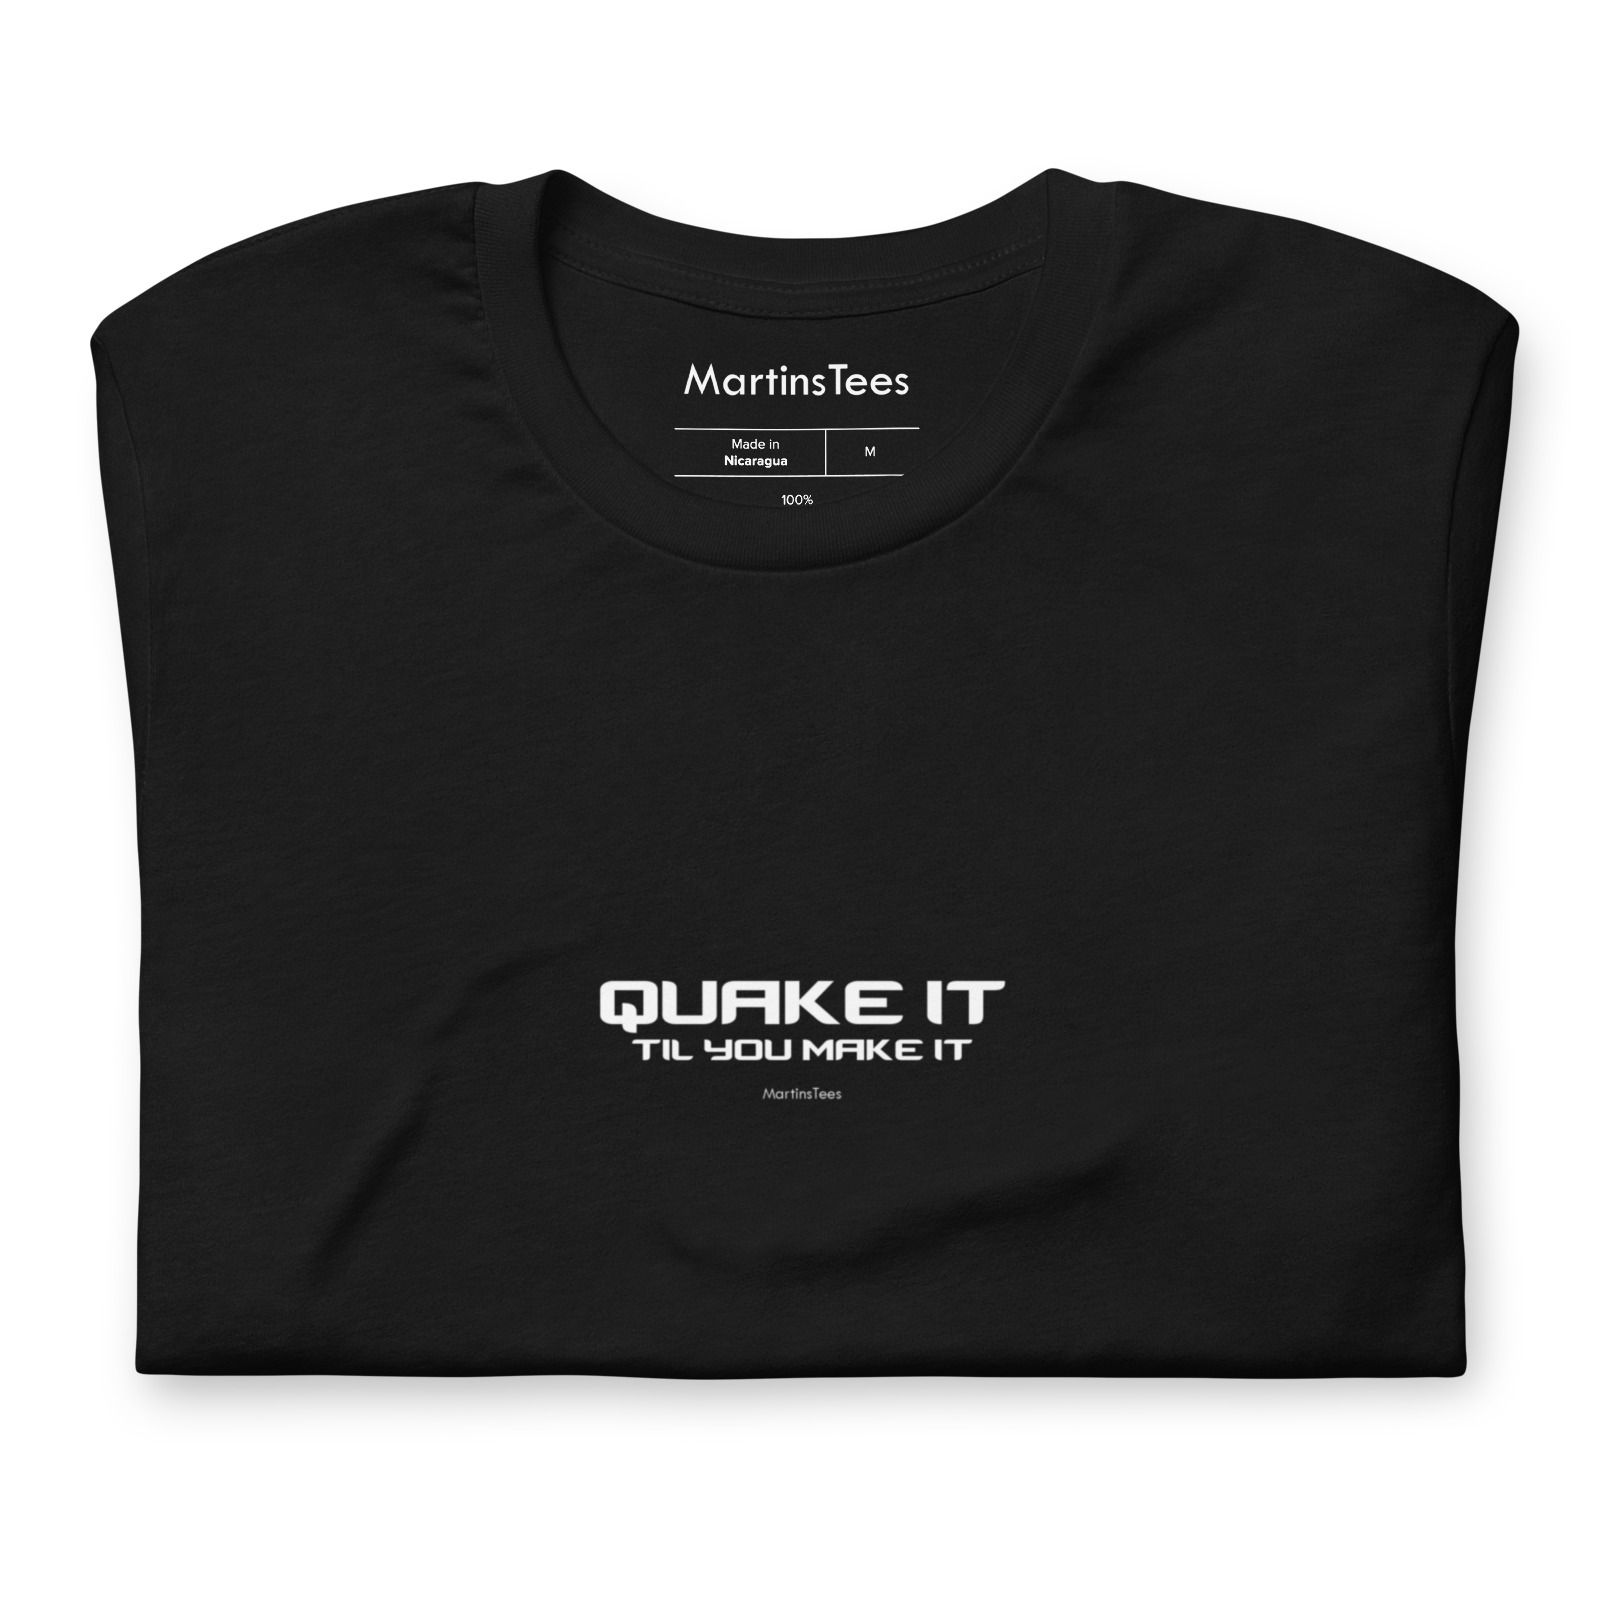 T-shirt: QUAKE IT - TIL YOU MAKE IT